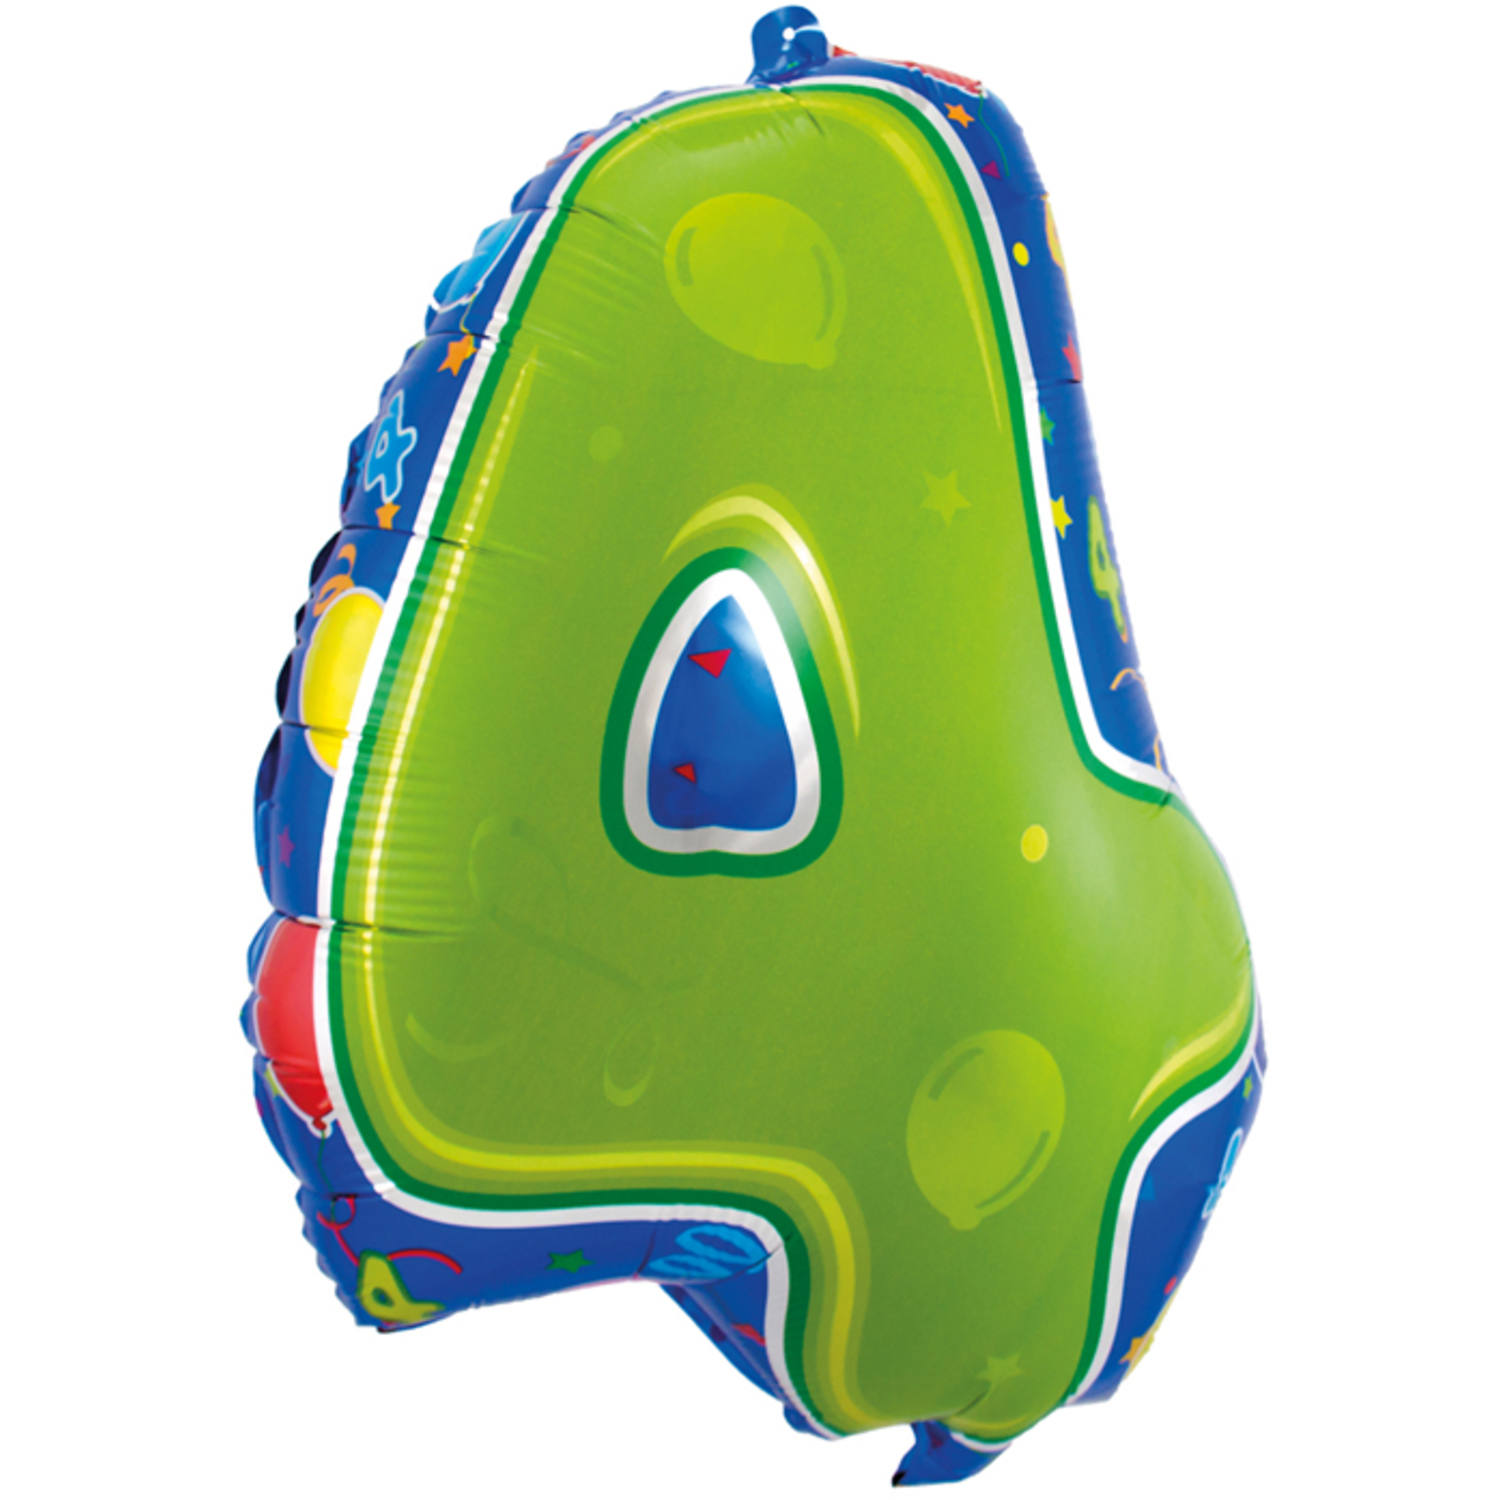 Folienballon  Zahl 4  - grün/blau - 56cm (Unverpackt)